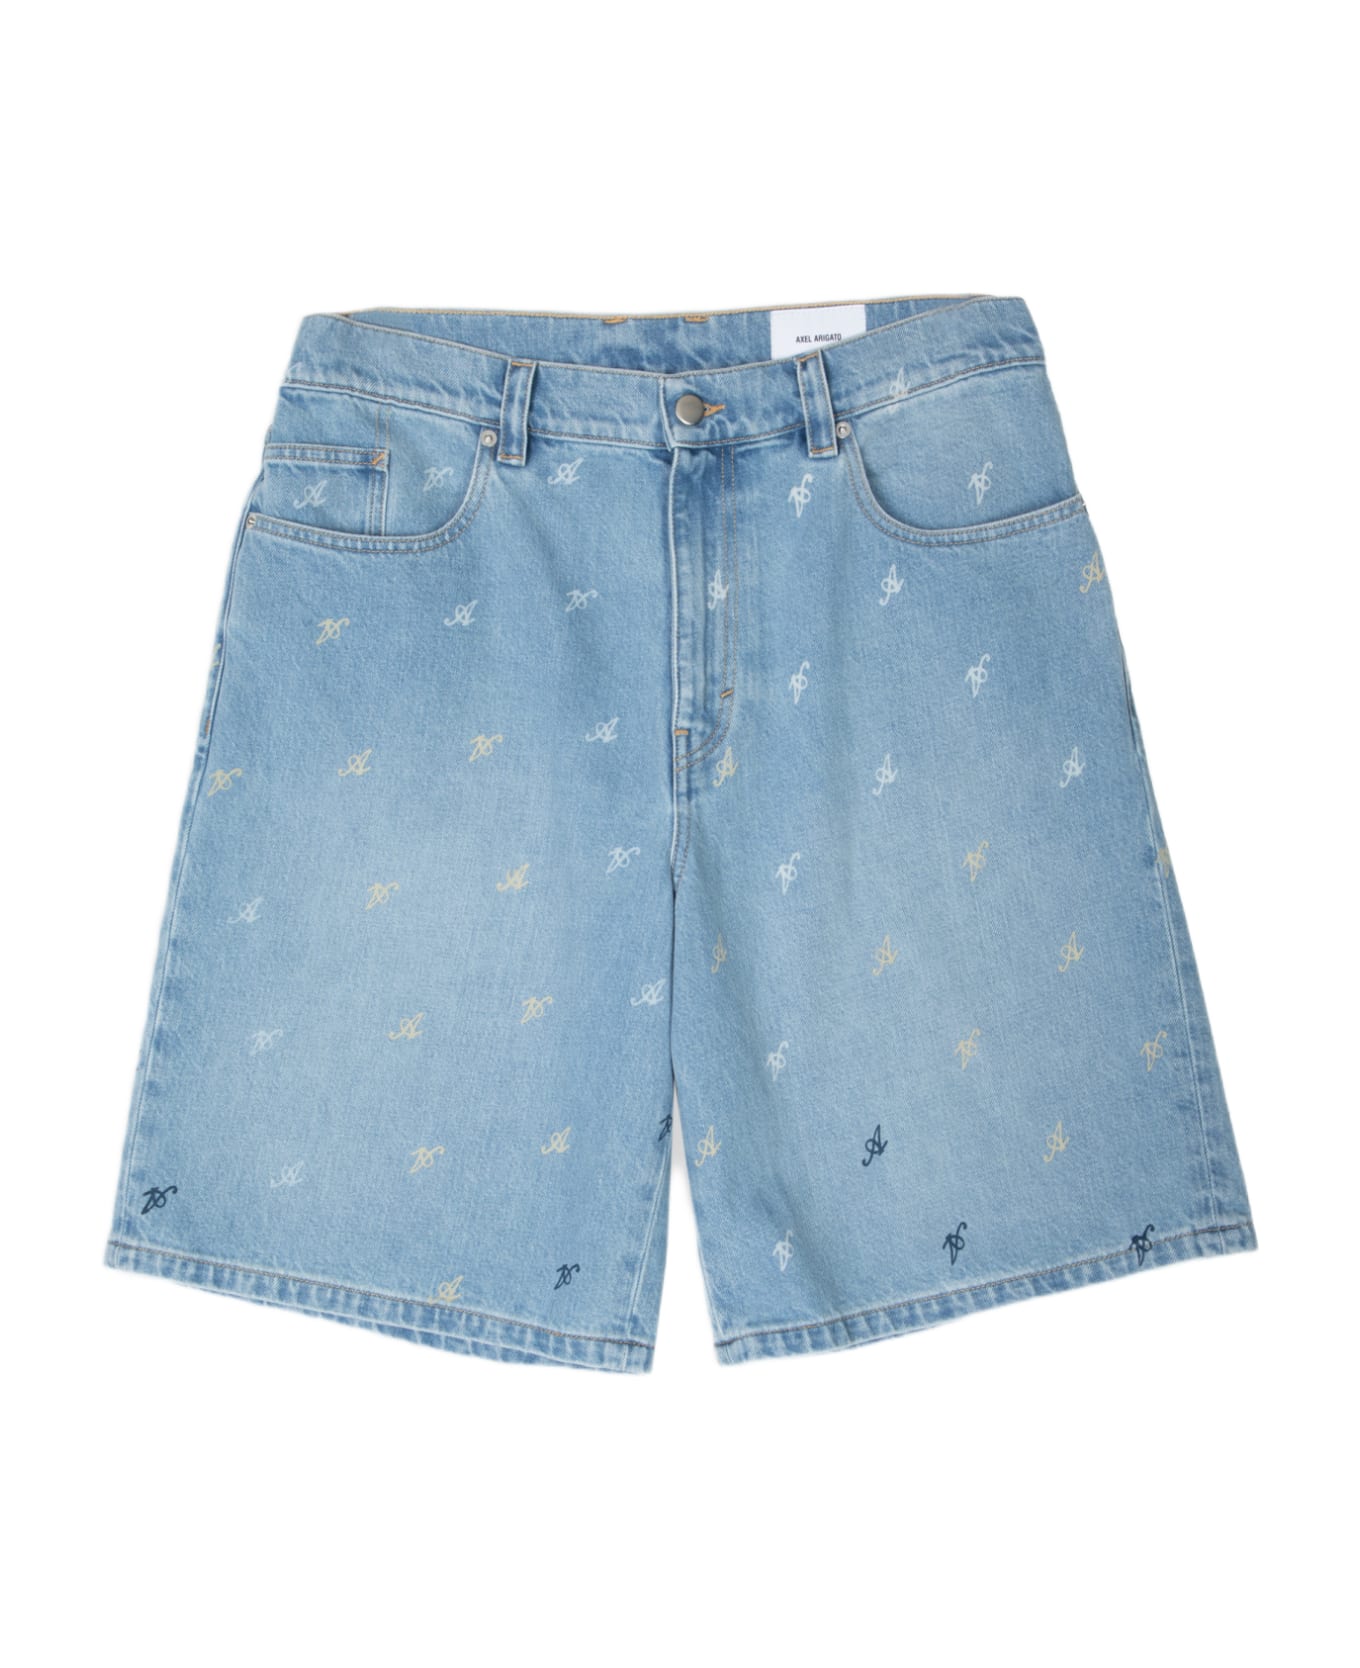 Axel Arigato Miles Short Light blue denim shorts with monogram pattern - Miles Shorts - Blu